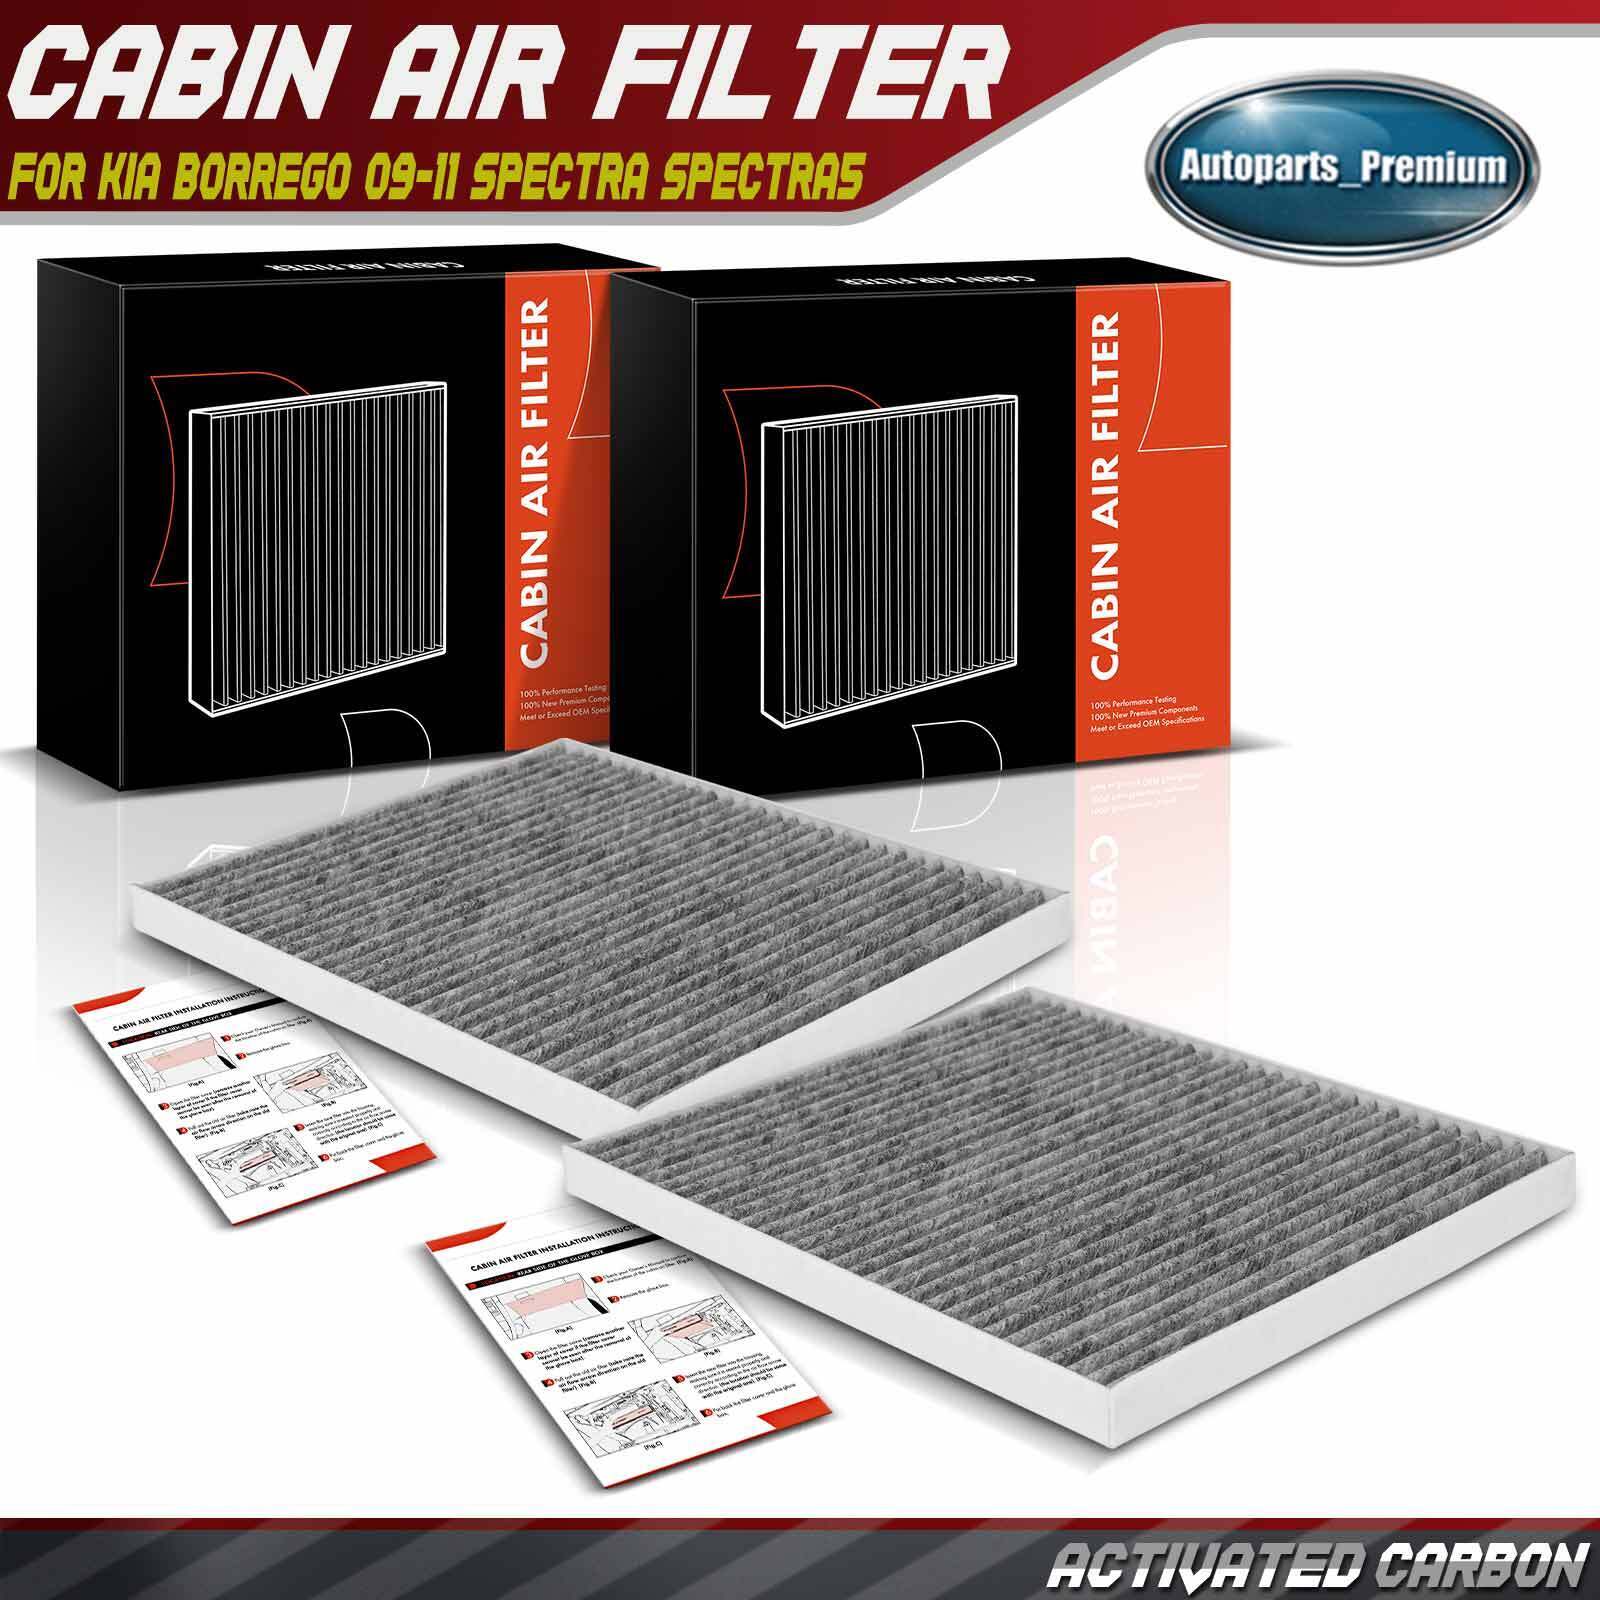 2x Activated Carbon Cabin Air Filter for Kia Borrego 2009-2011 Spectra 2004-2009